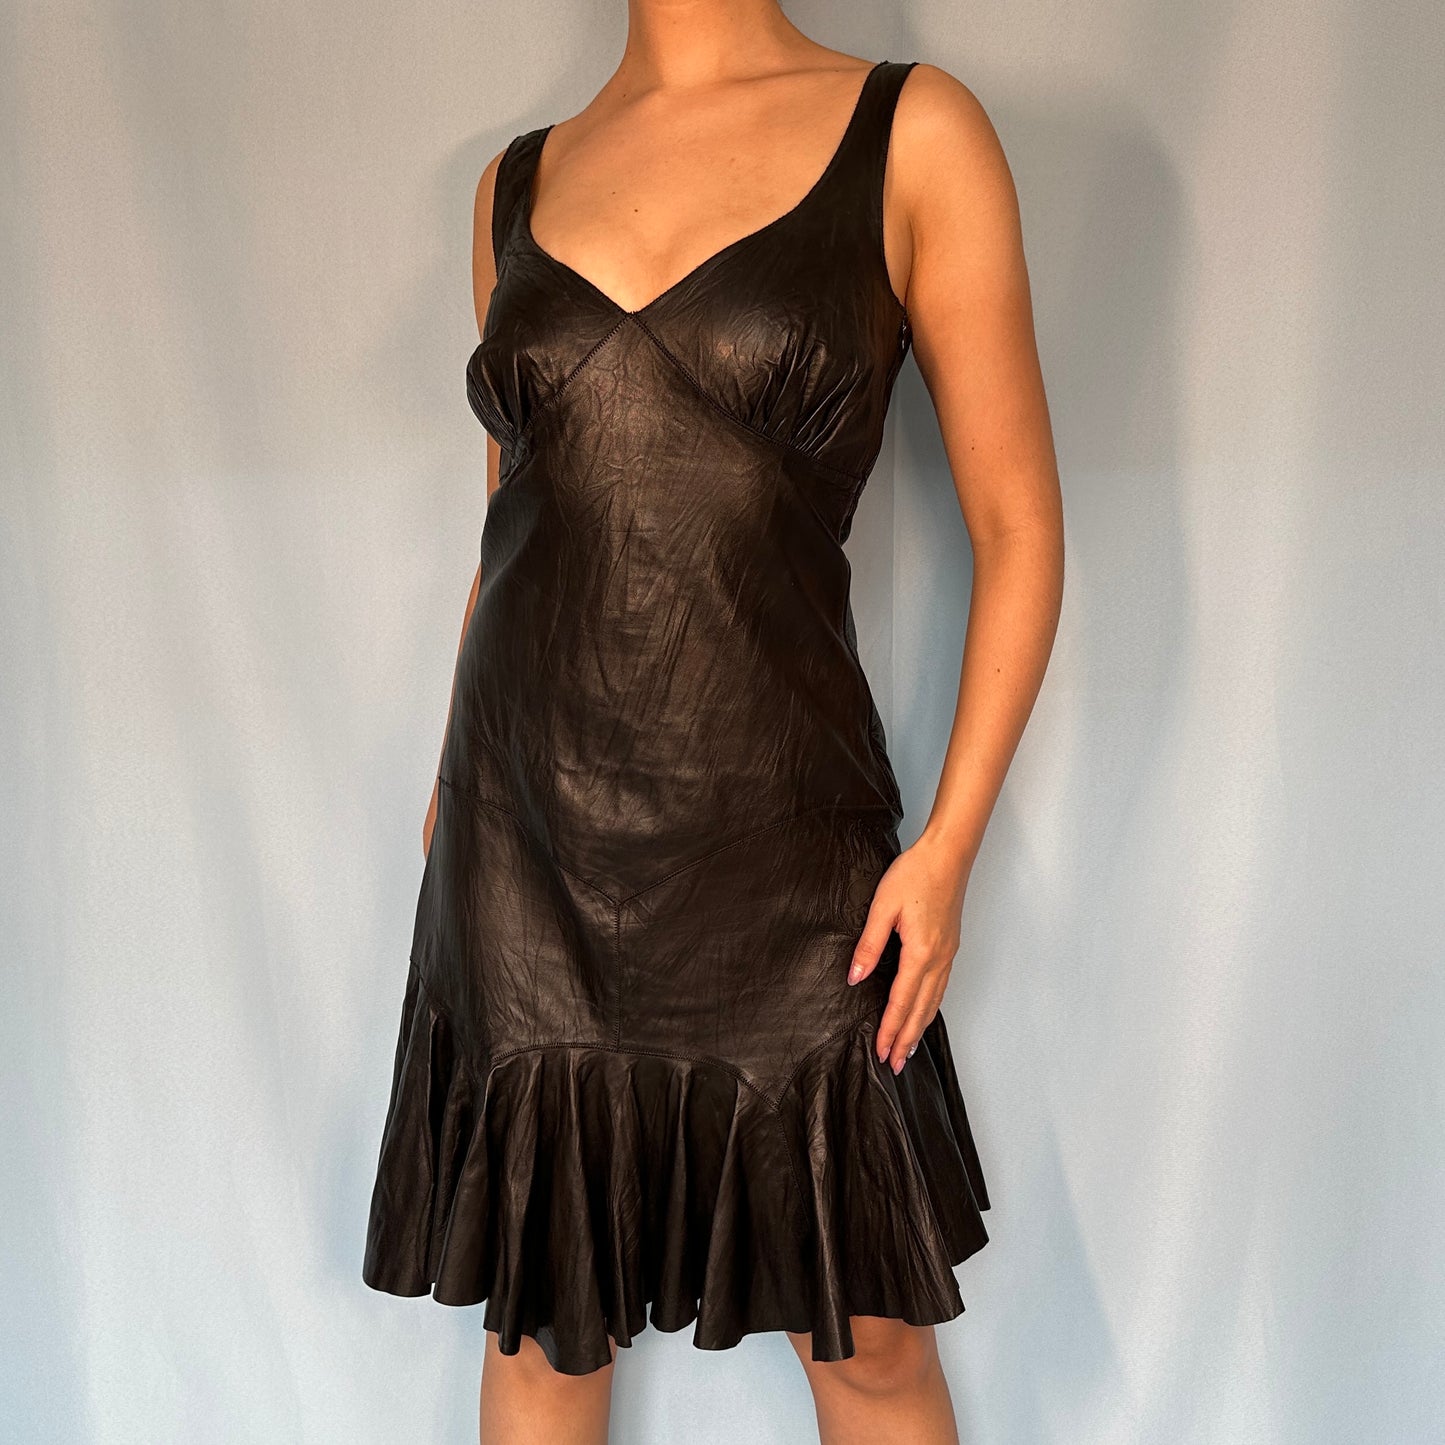 Roberto Cavalli Spring 2003 Black Leather Dress